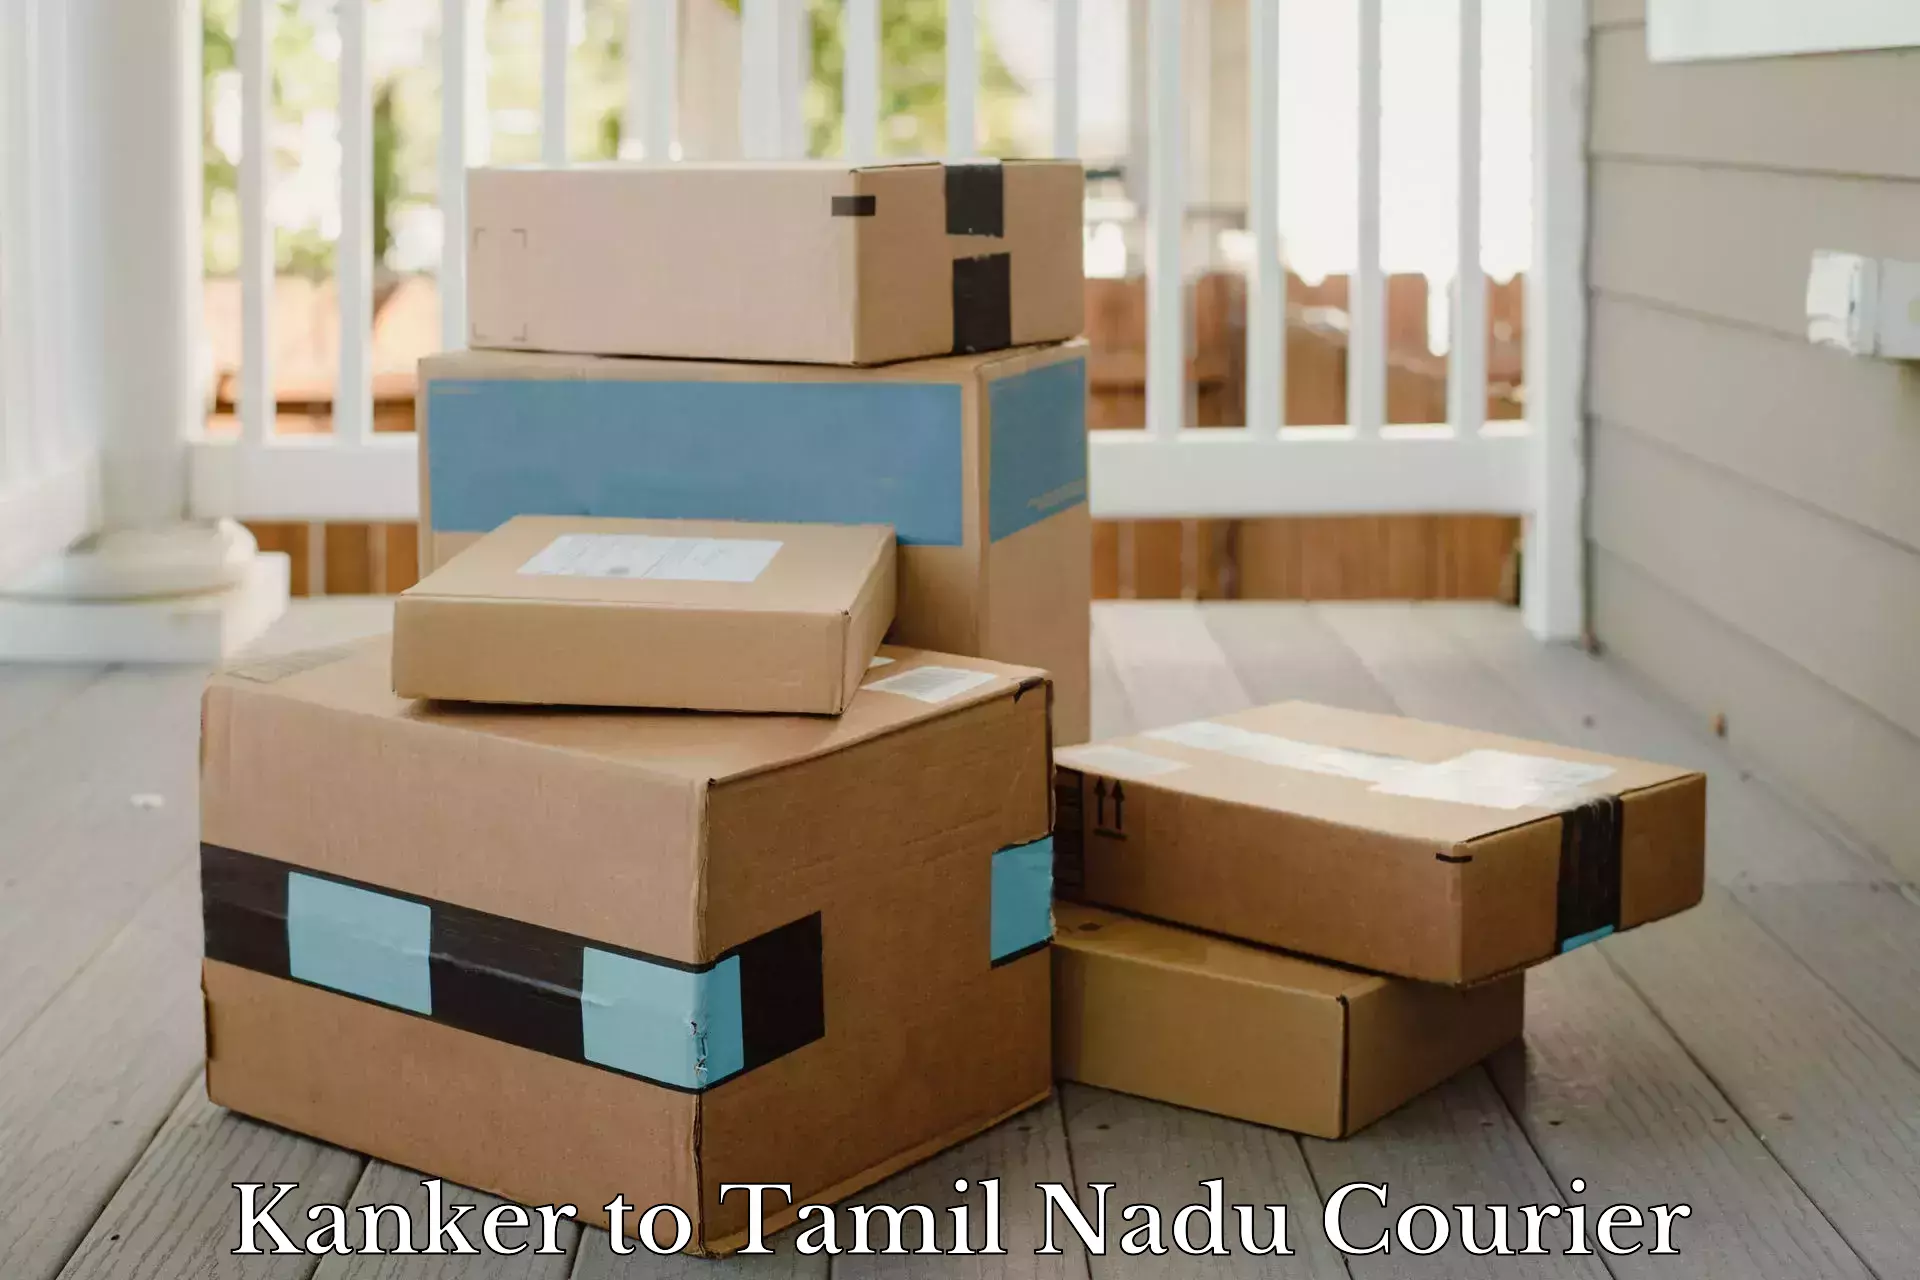 User-friendly delivery service Kanker to Tamil Nadu